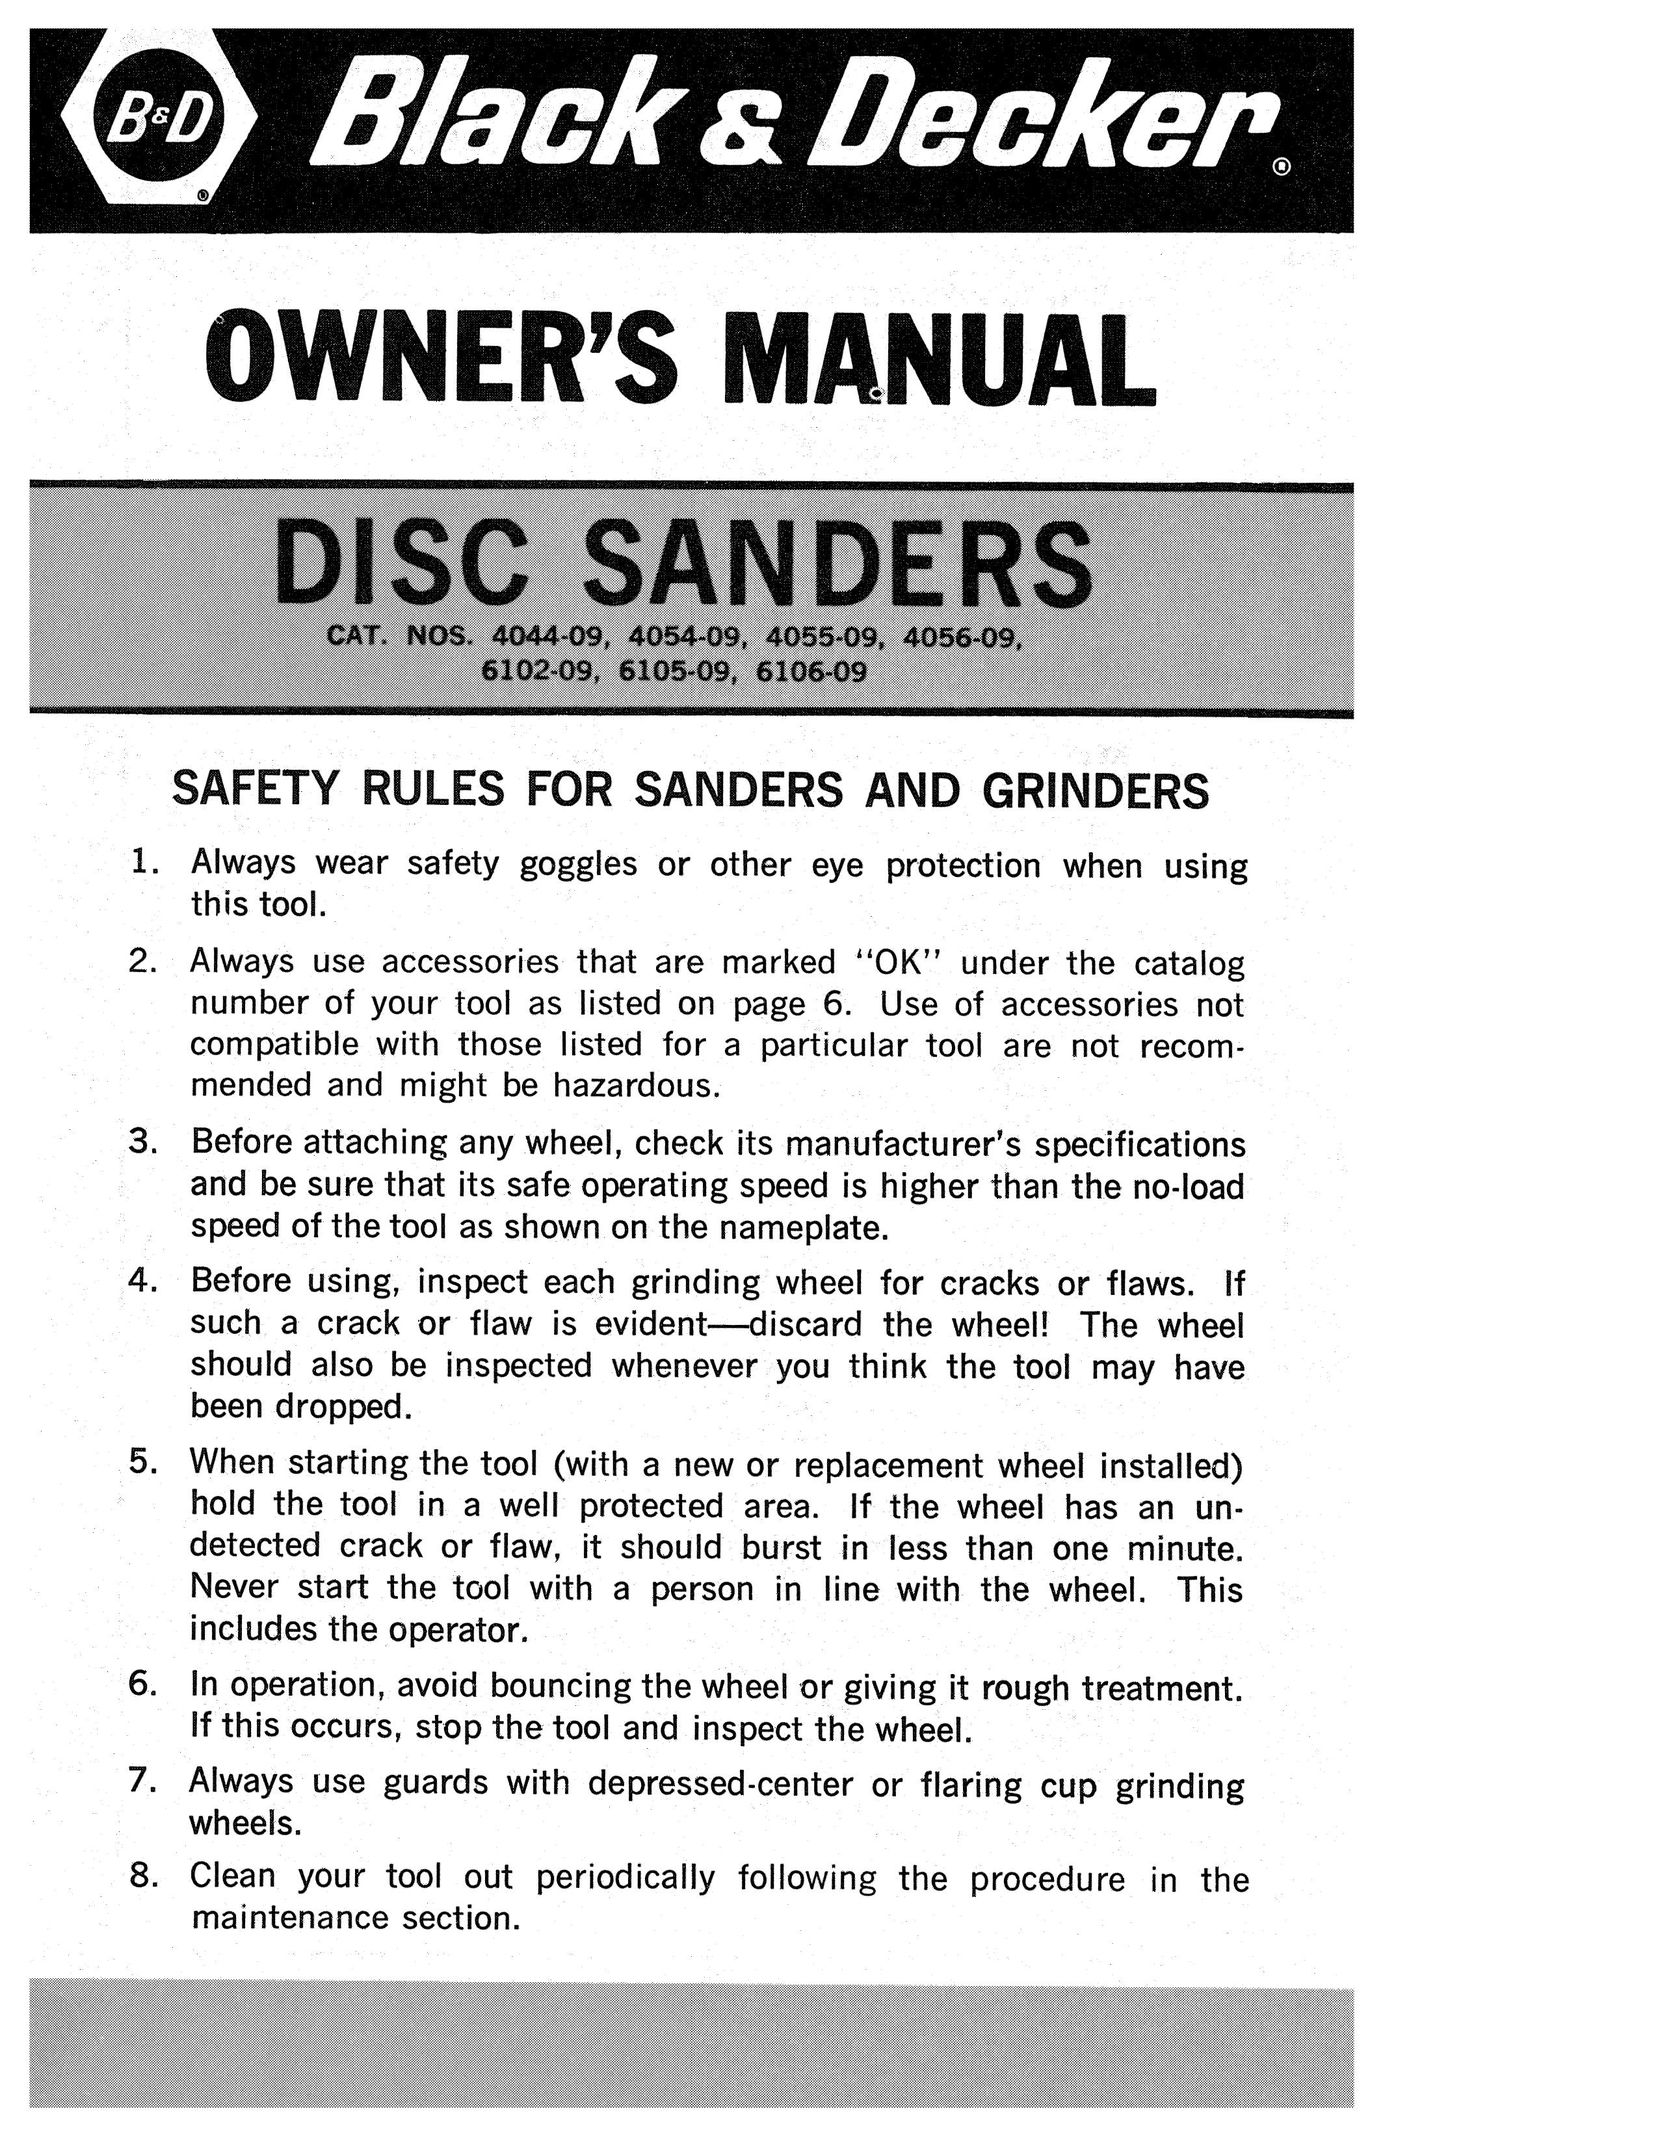 Black & Decker 6106-09 Sander User Manual